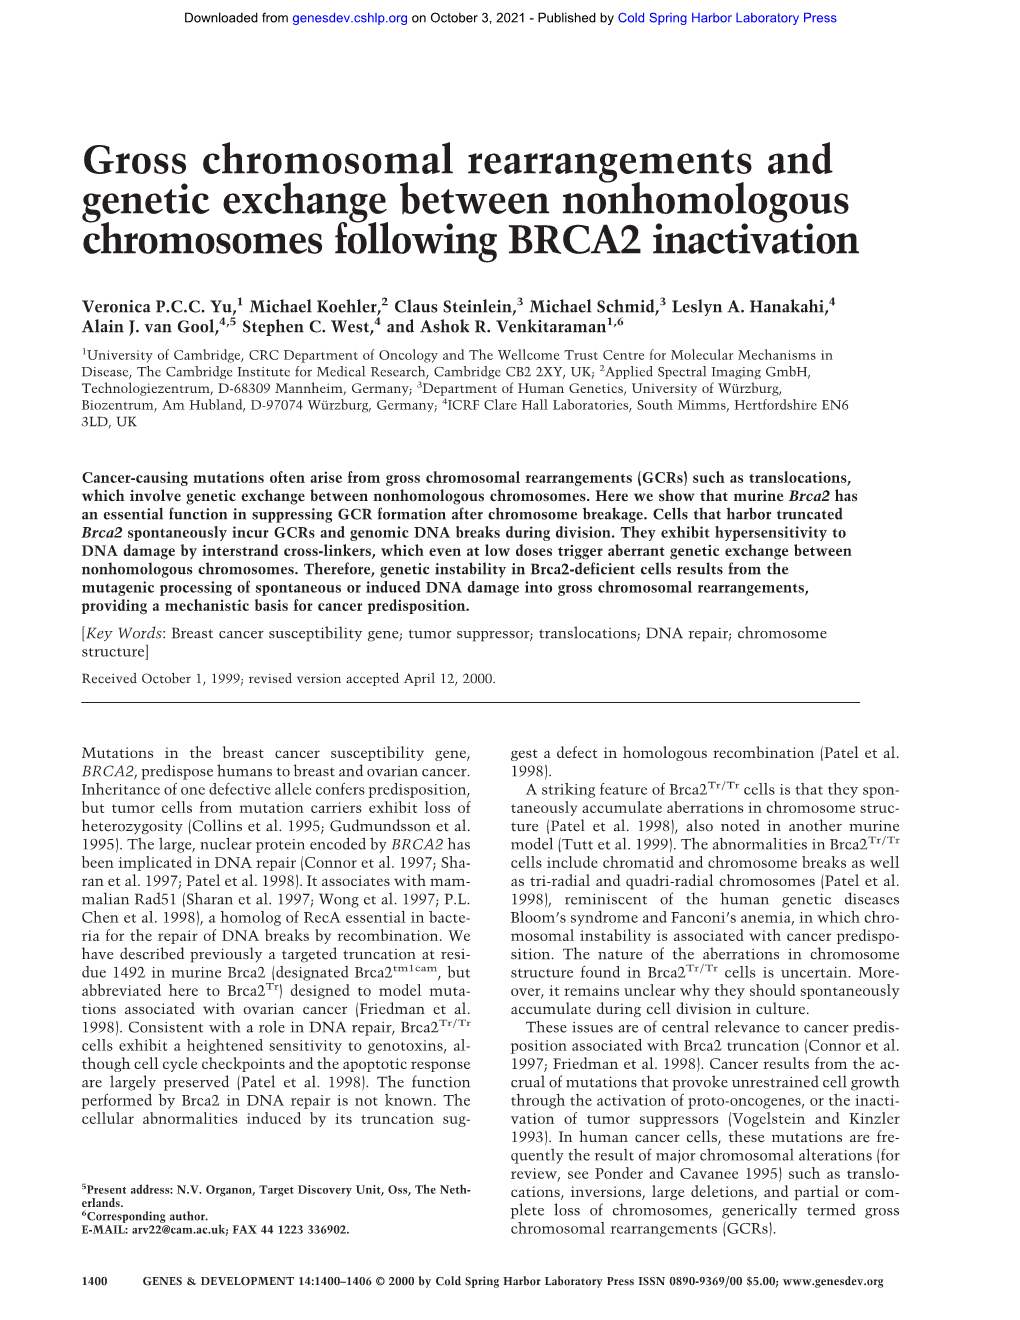 Gross Chromosomal Rearrangements and Genetic Exchange Between Nonhomologous Chromosomes Following BRCA2 Inactivation